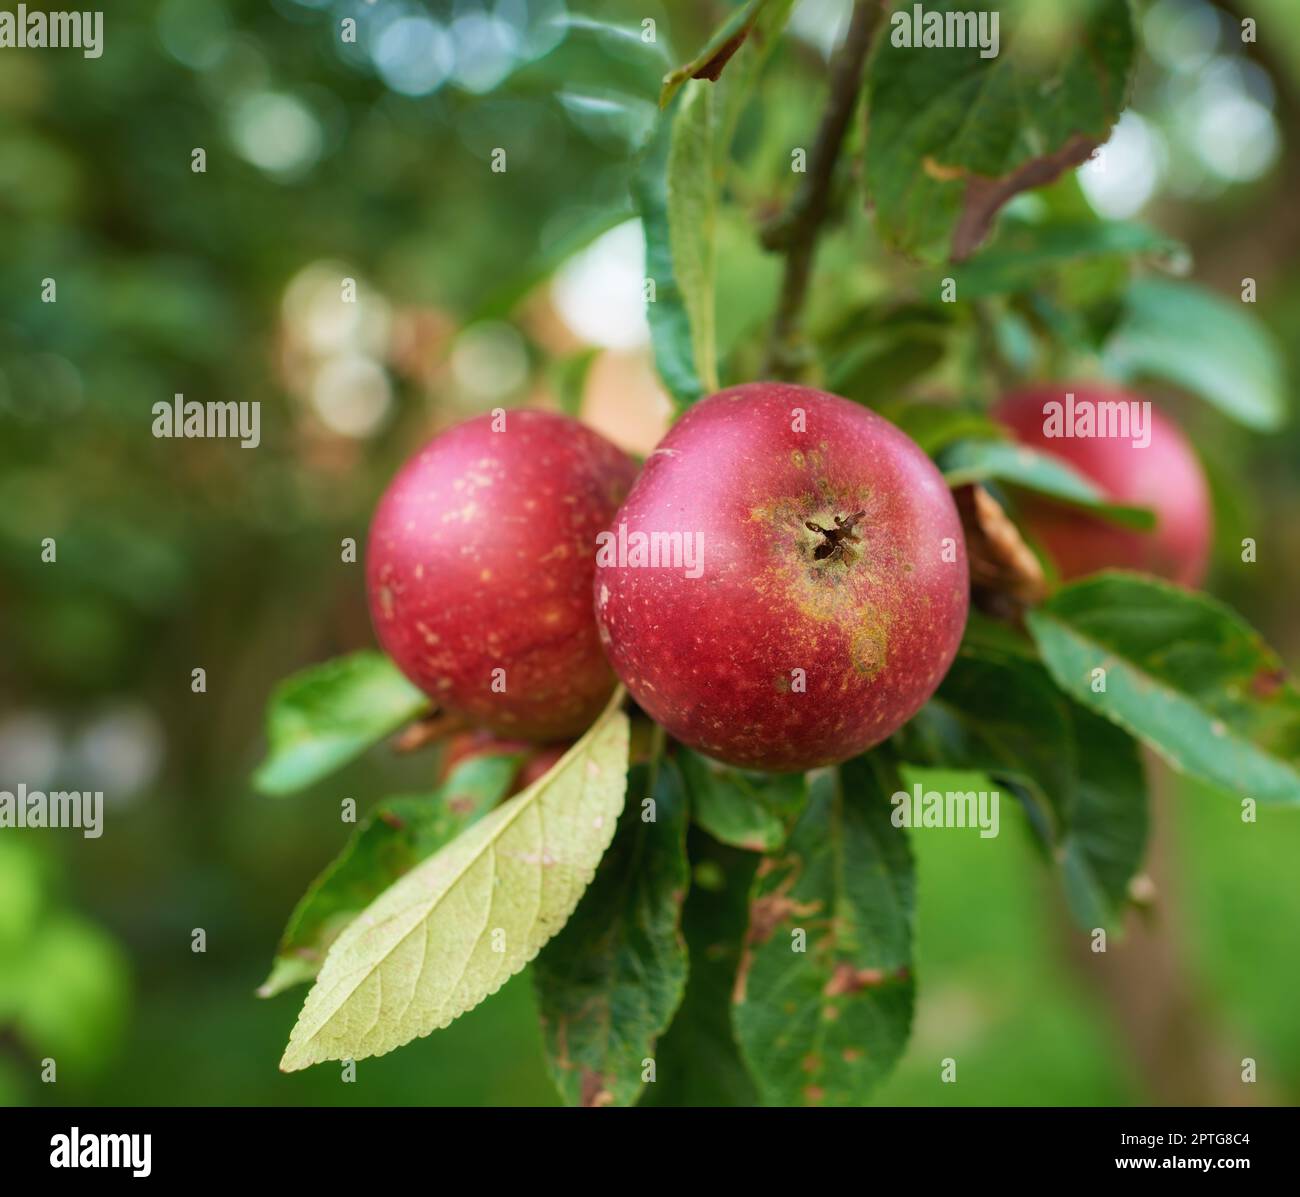 https://c8.alamy.com/comp/2PTG8C4/fresh-apples-fresh-apples-an-apple-a-day-keeps-the-doctor-away-2PTG8C4.jpg